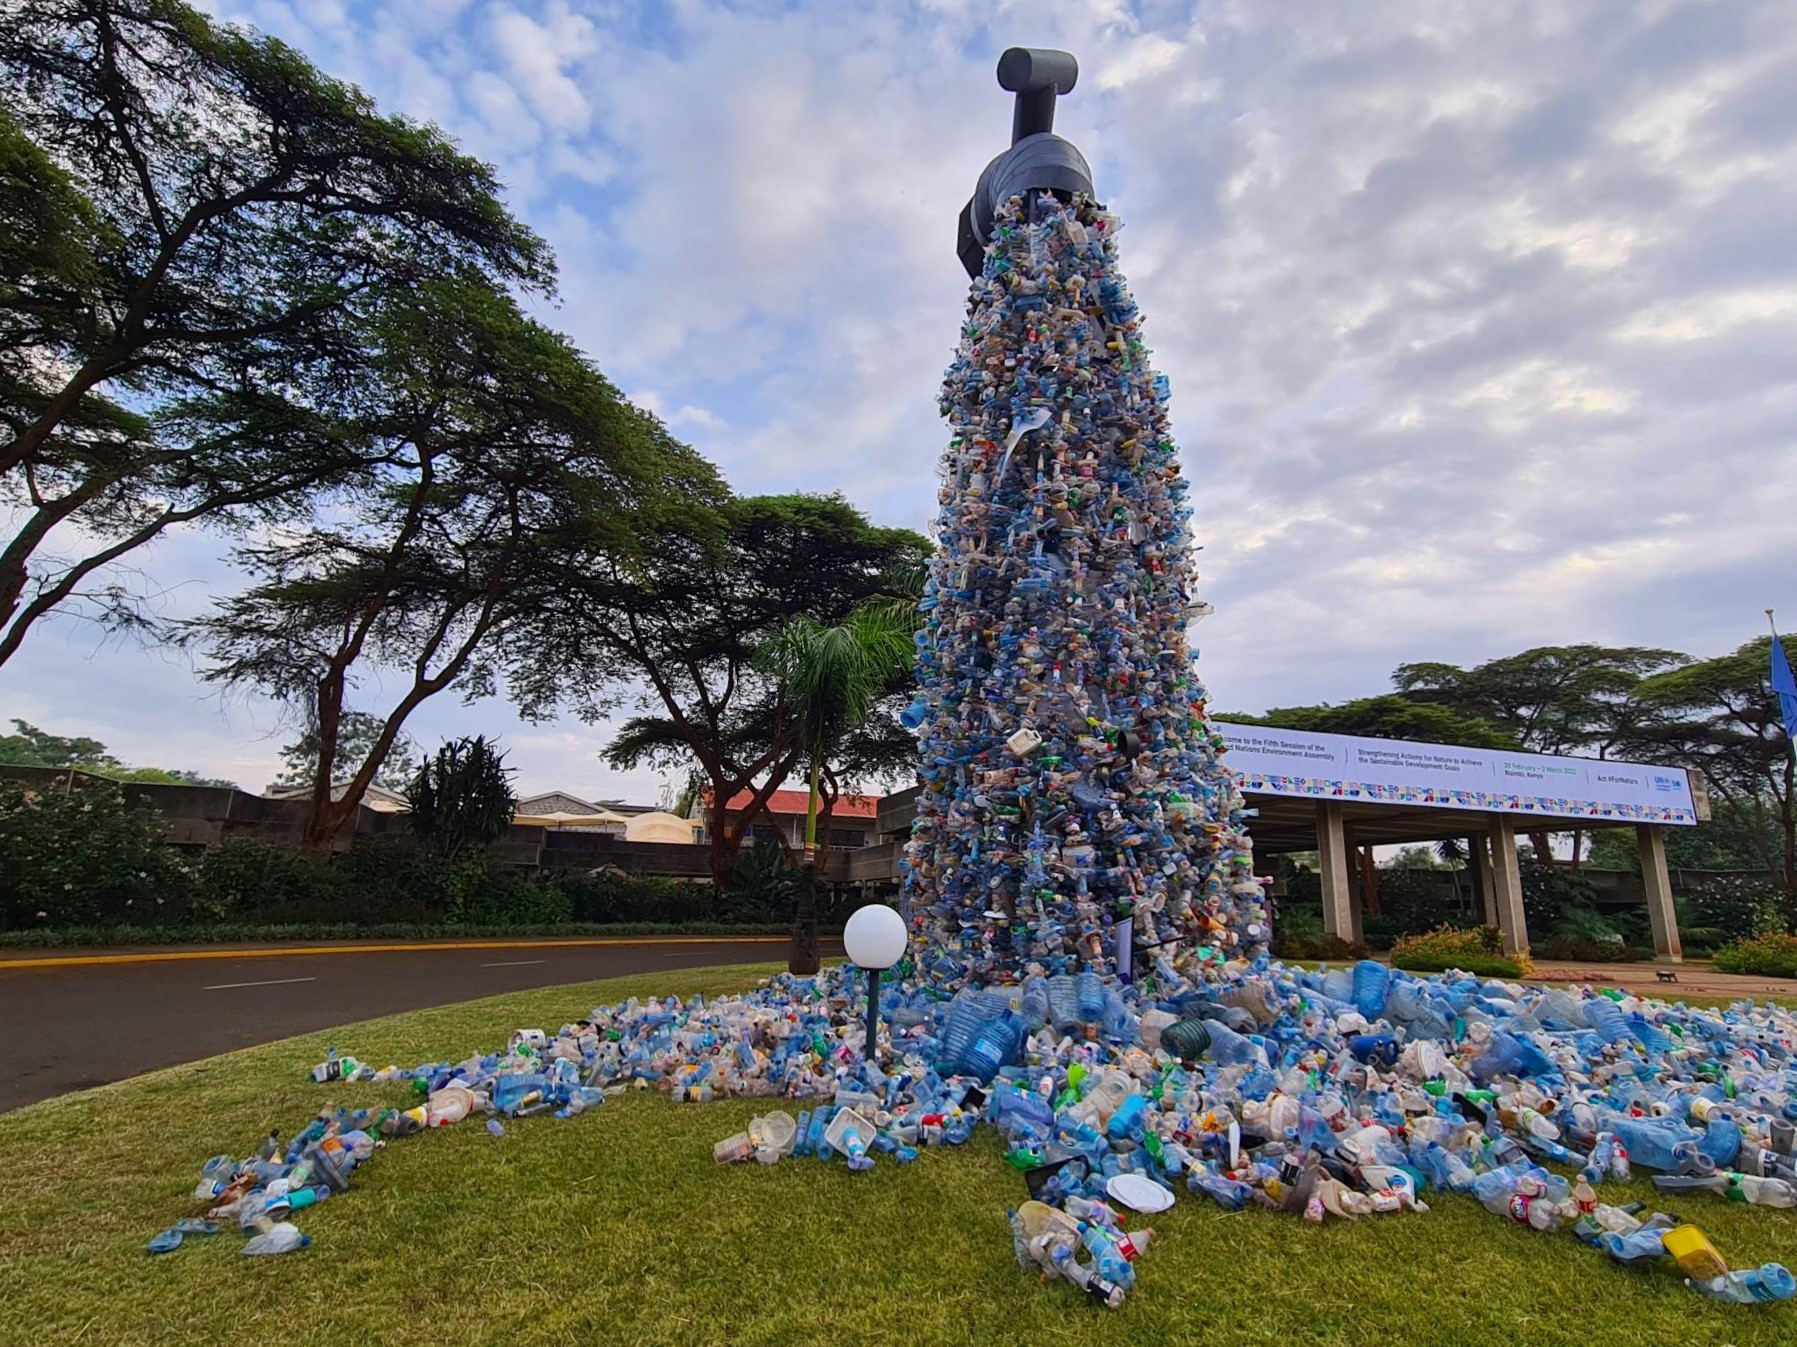 Plastskulptur-nairobi-2022-unea-horisontal-beskjært.png#asset:8616